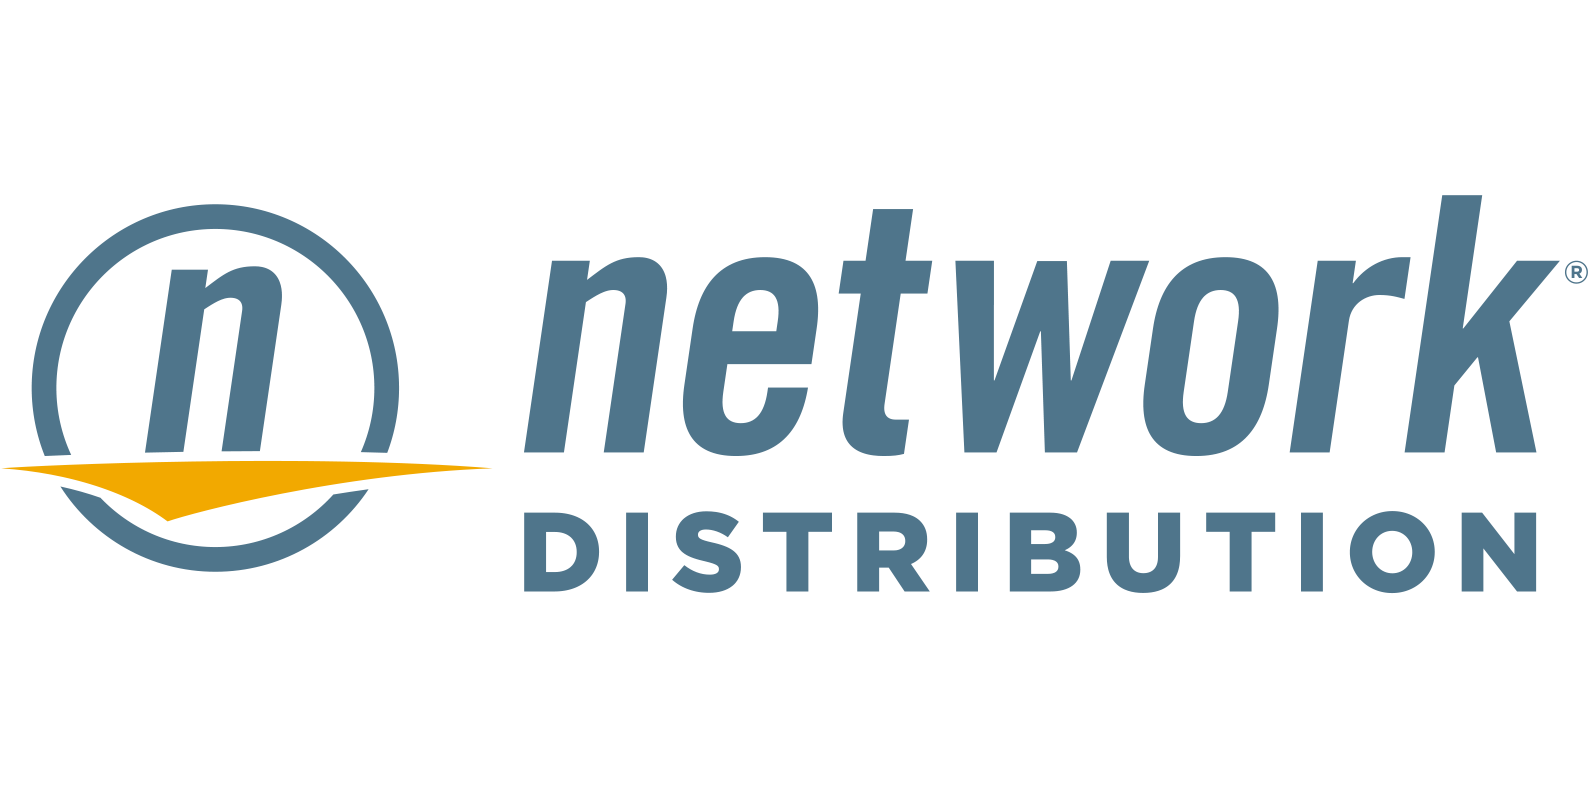 Network distribution logo